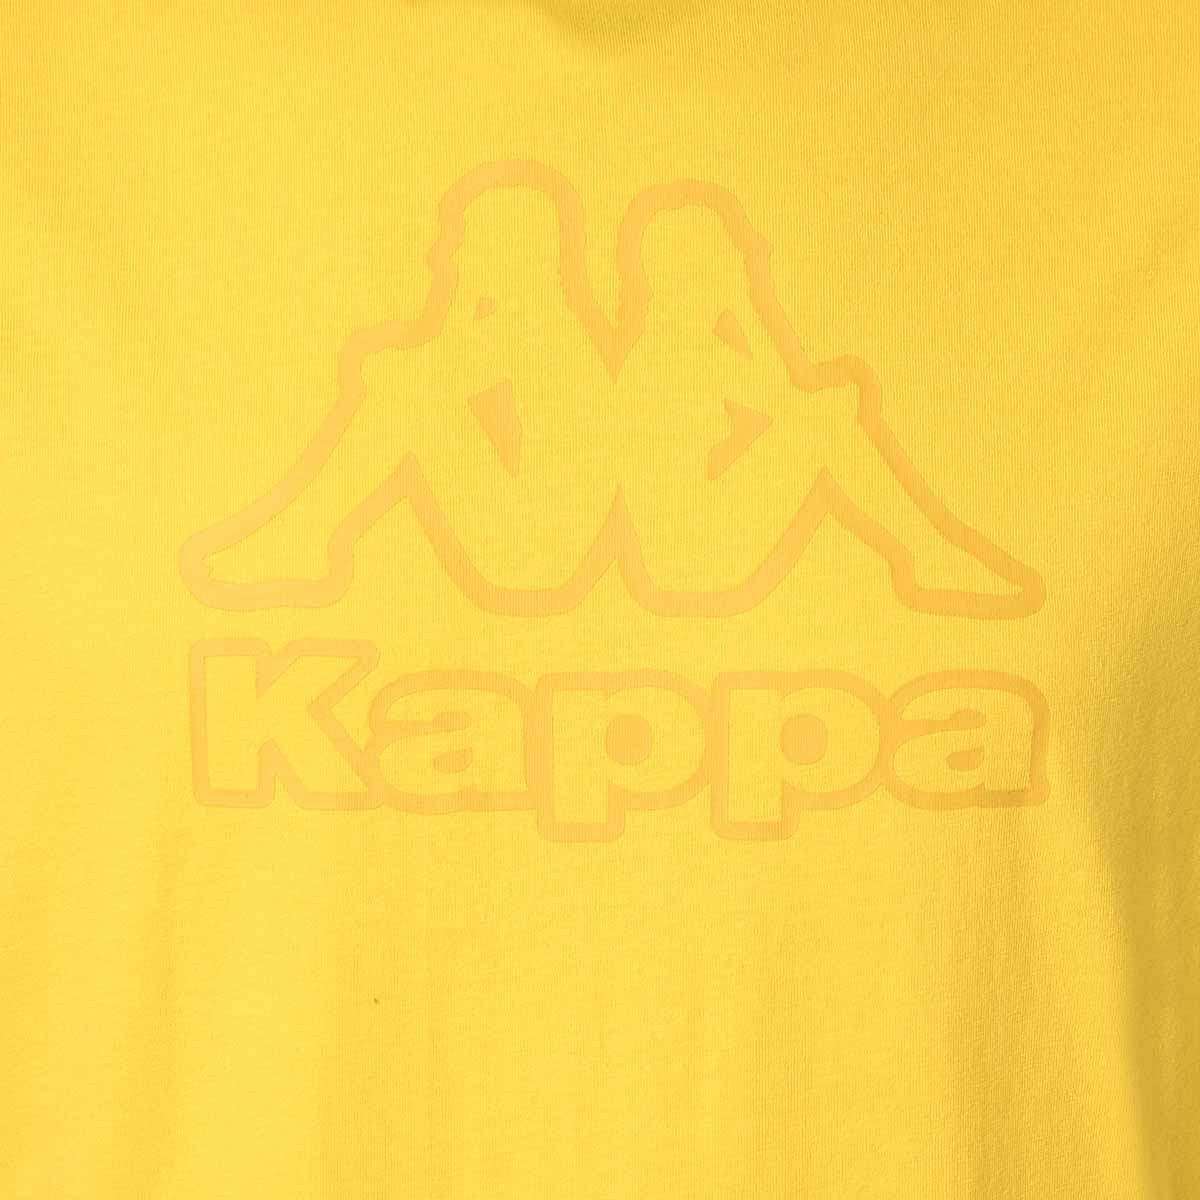 Camiseta Kappa Cremy - Ropa Ideal Para El Gim O Entrenar  MKP